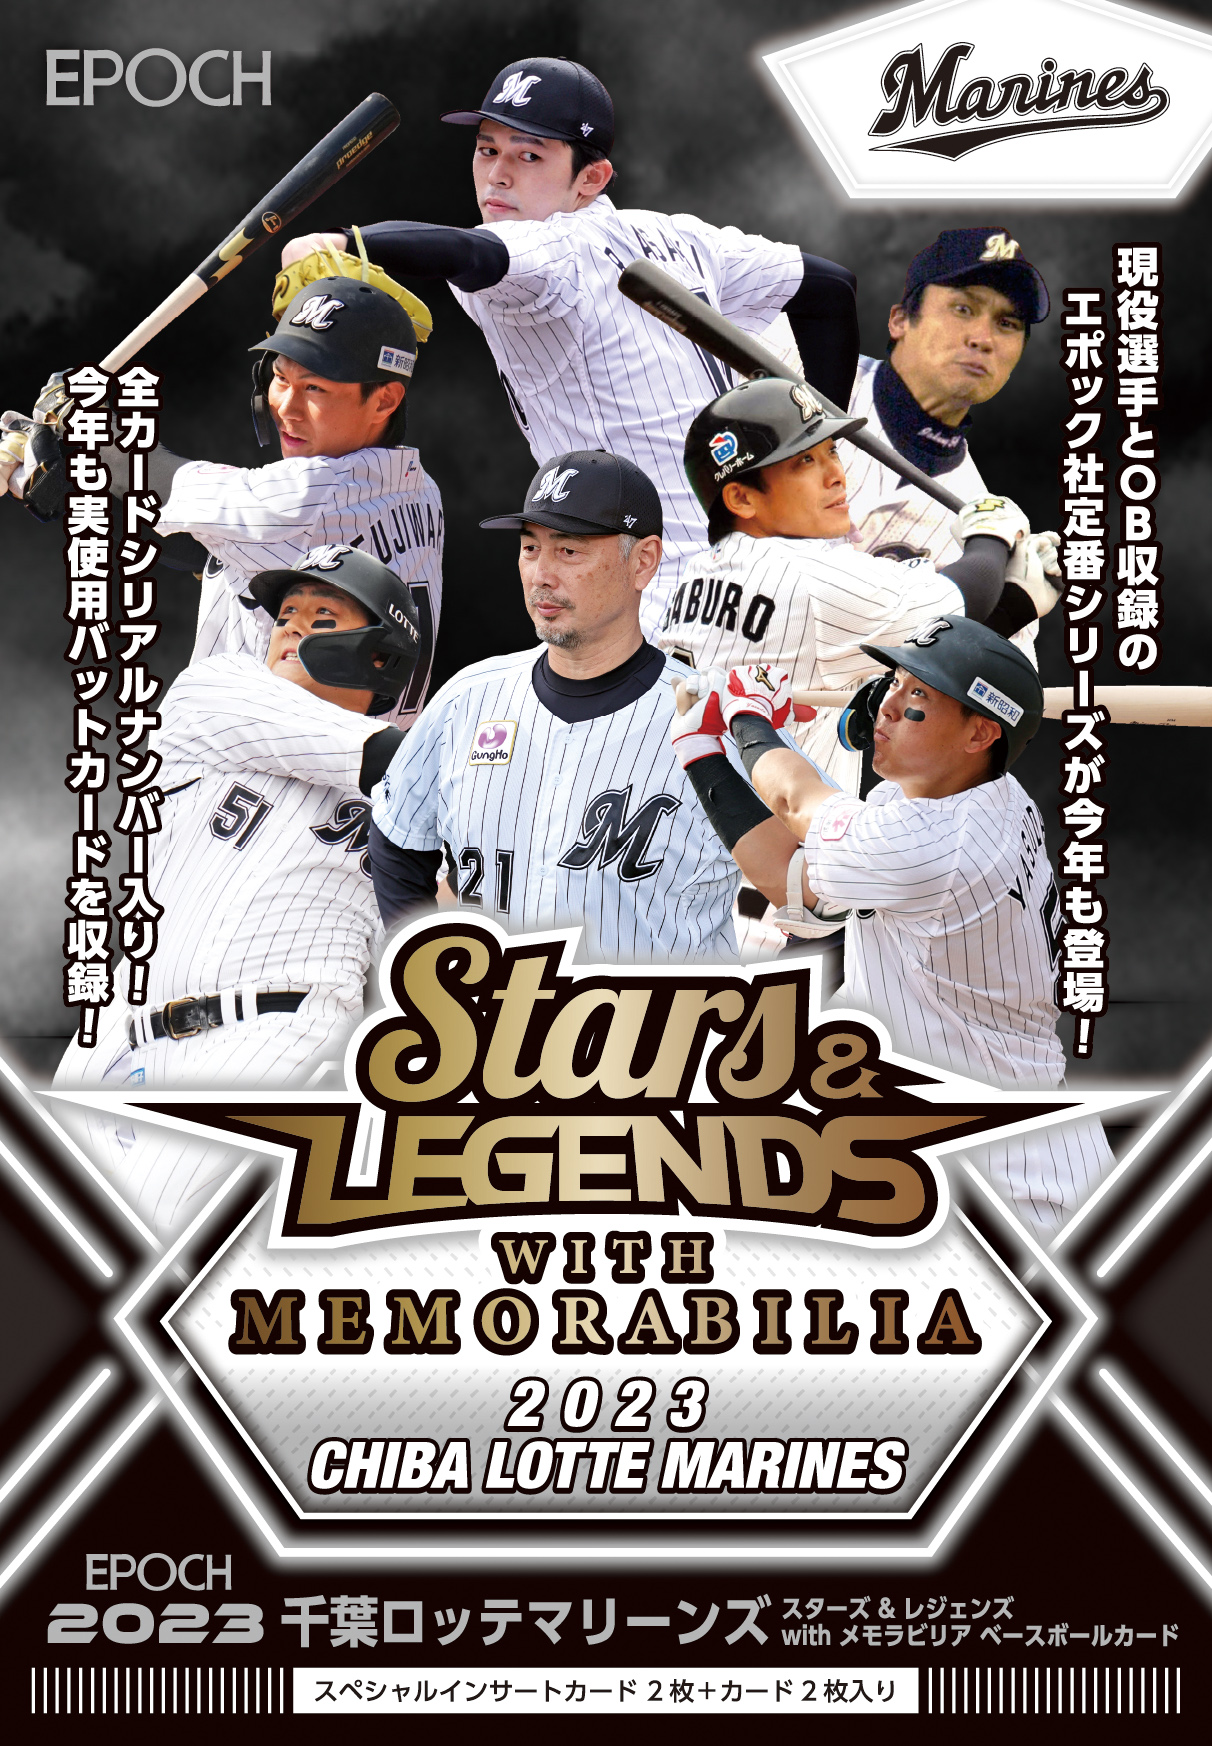 EPOCH 2023 千葉ロッテマリーンズ “STARS & LEGENDS with